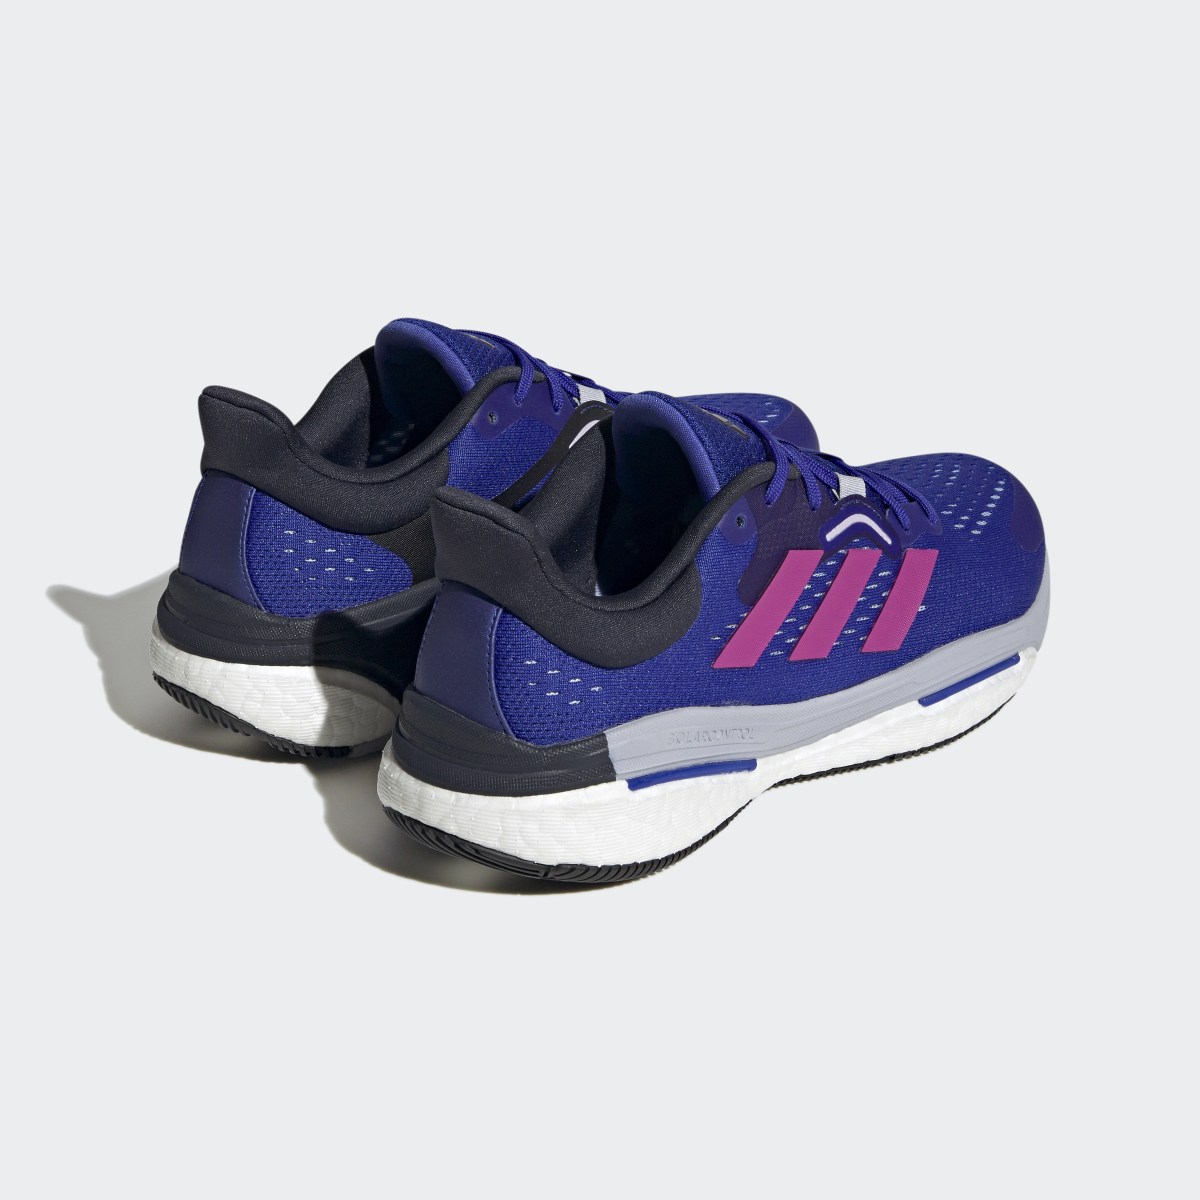 Adidas Solarcontrol Shoes. 6